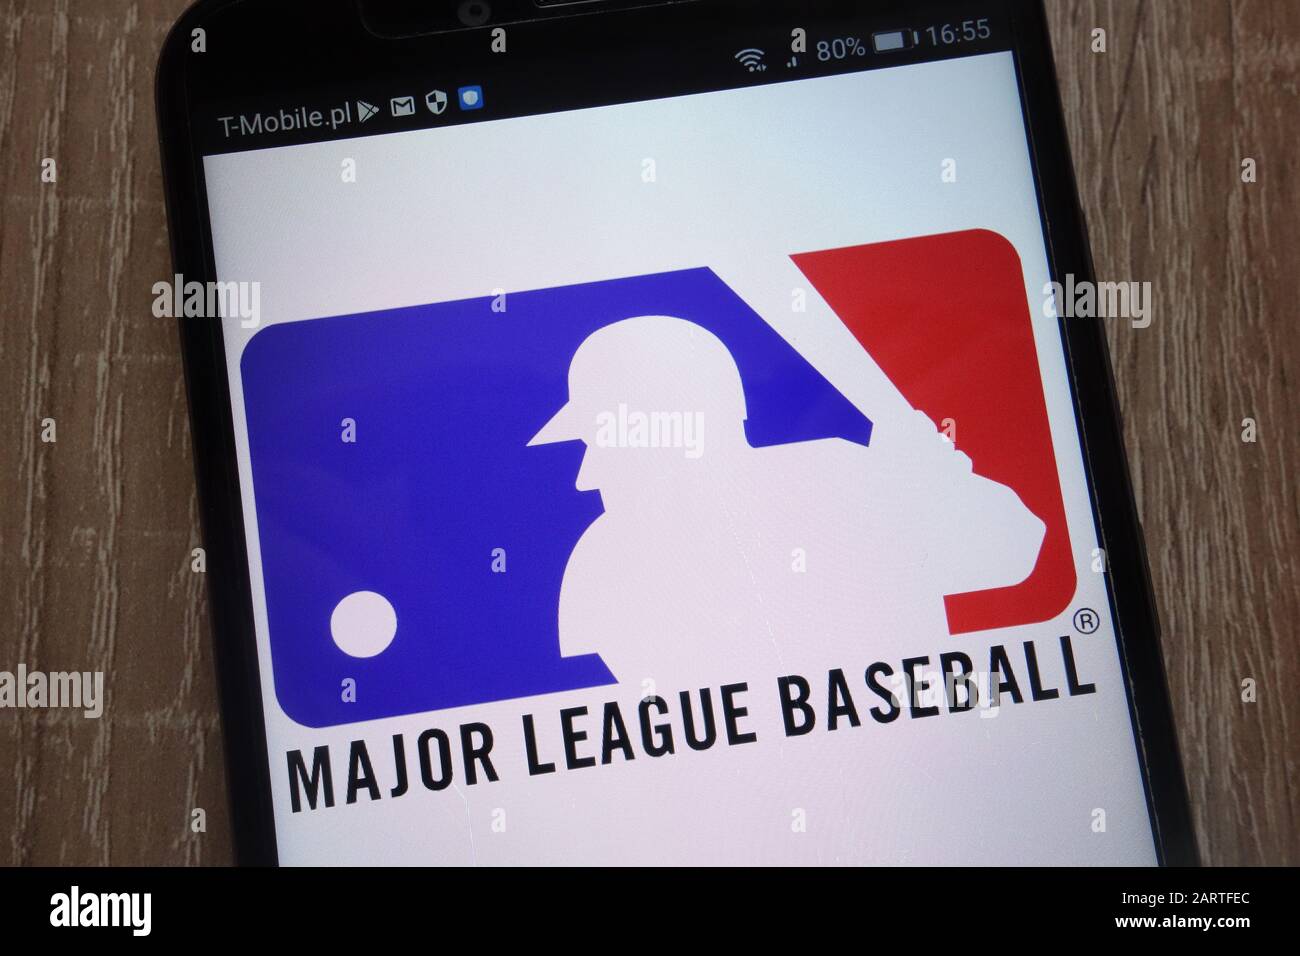 Major League Baseball logo displayed on a modern smartphone Stock Photo